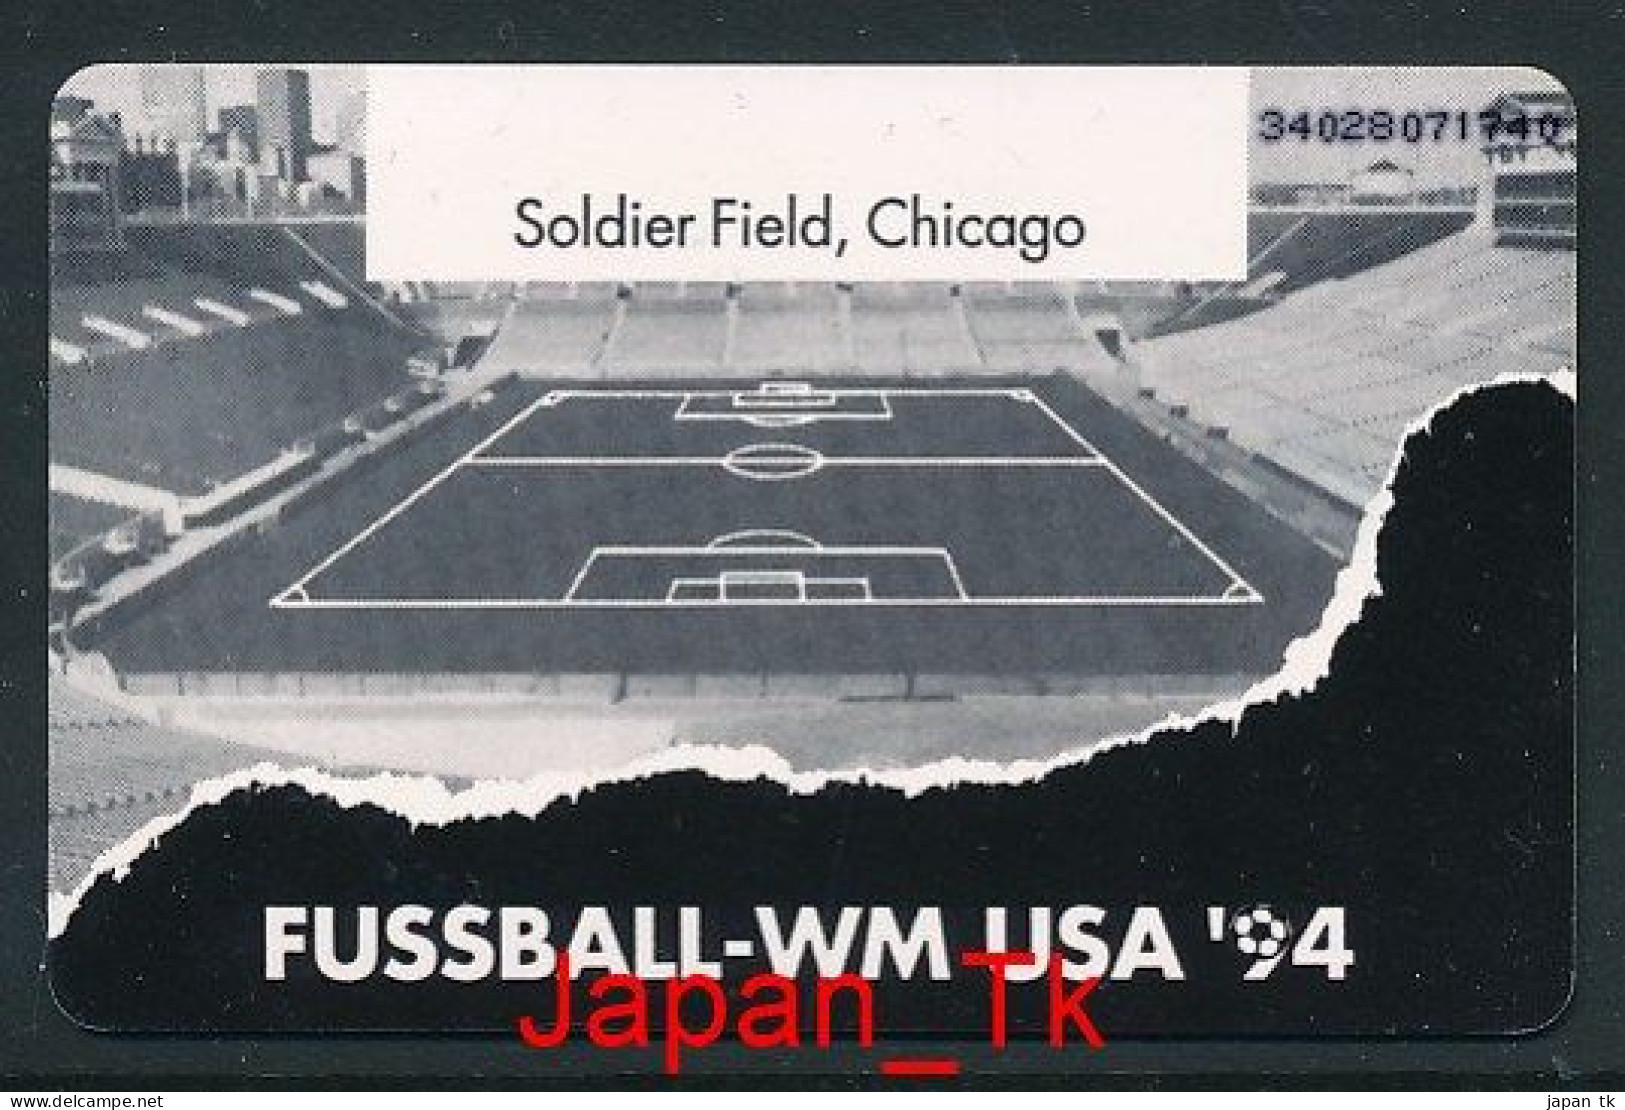 GERMANY O 469 94 Fußball WM USA 94 - Aufl  3 500 - Siehe Scan - O-Series : Customers Sets